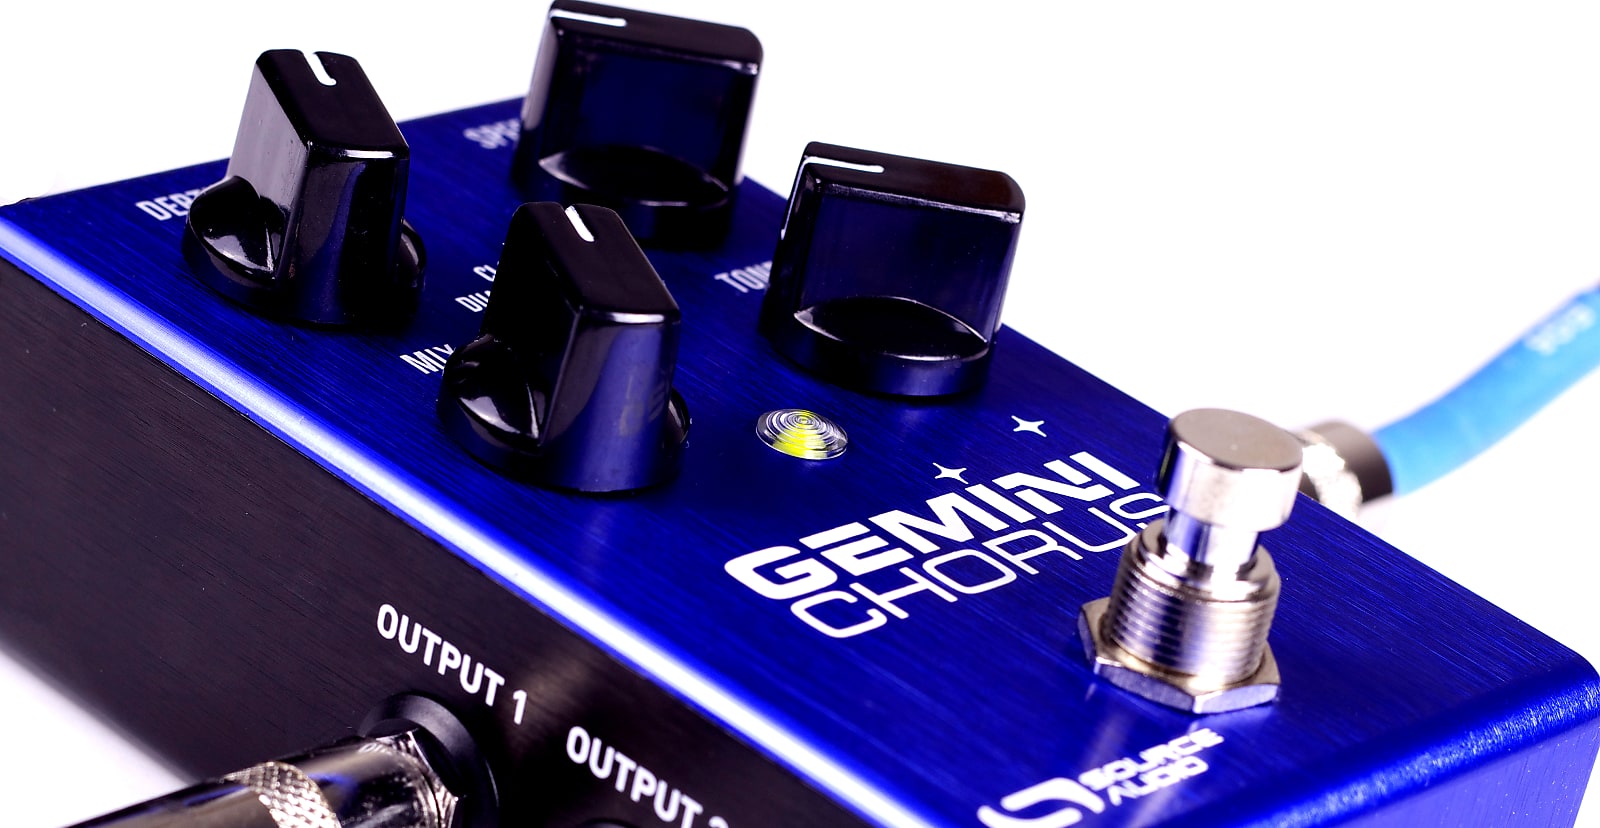 Source Audio SA242 One Series Gemini Chorus Effects Pedal